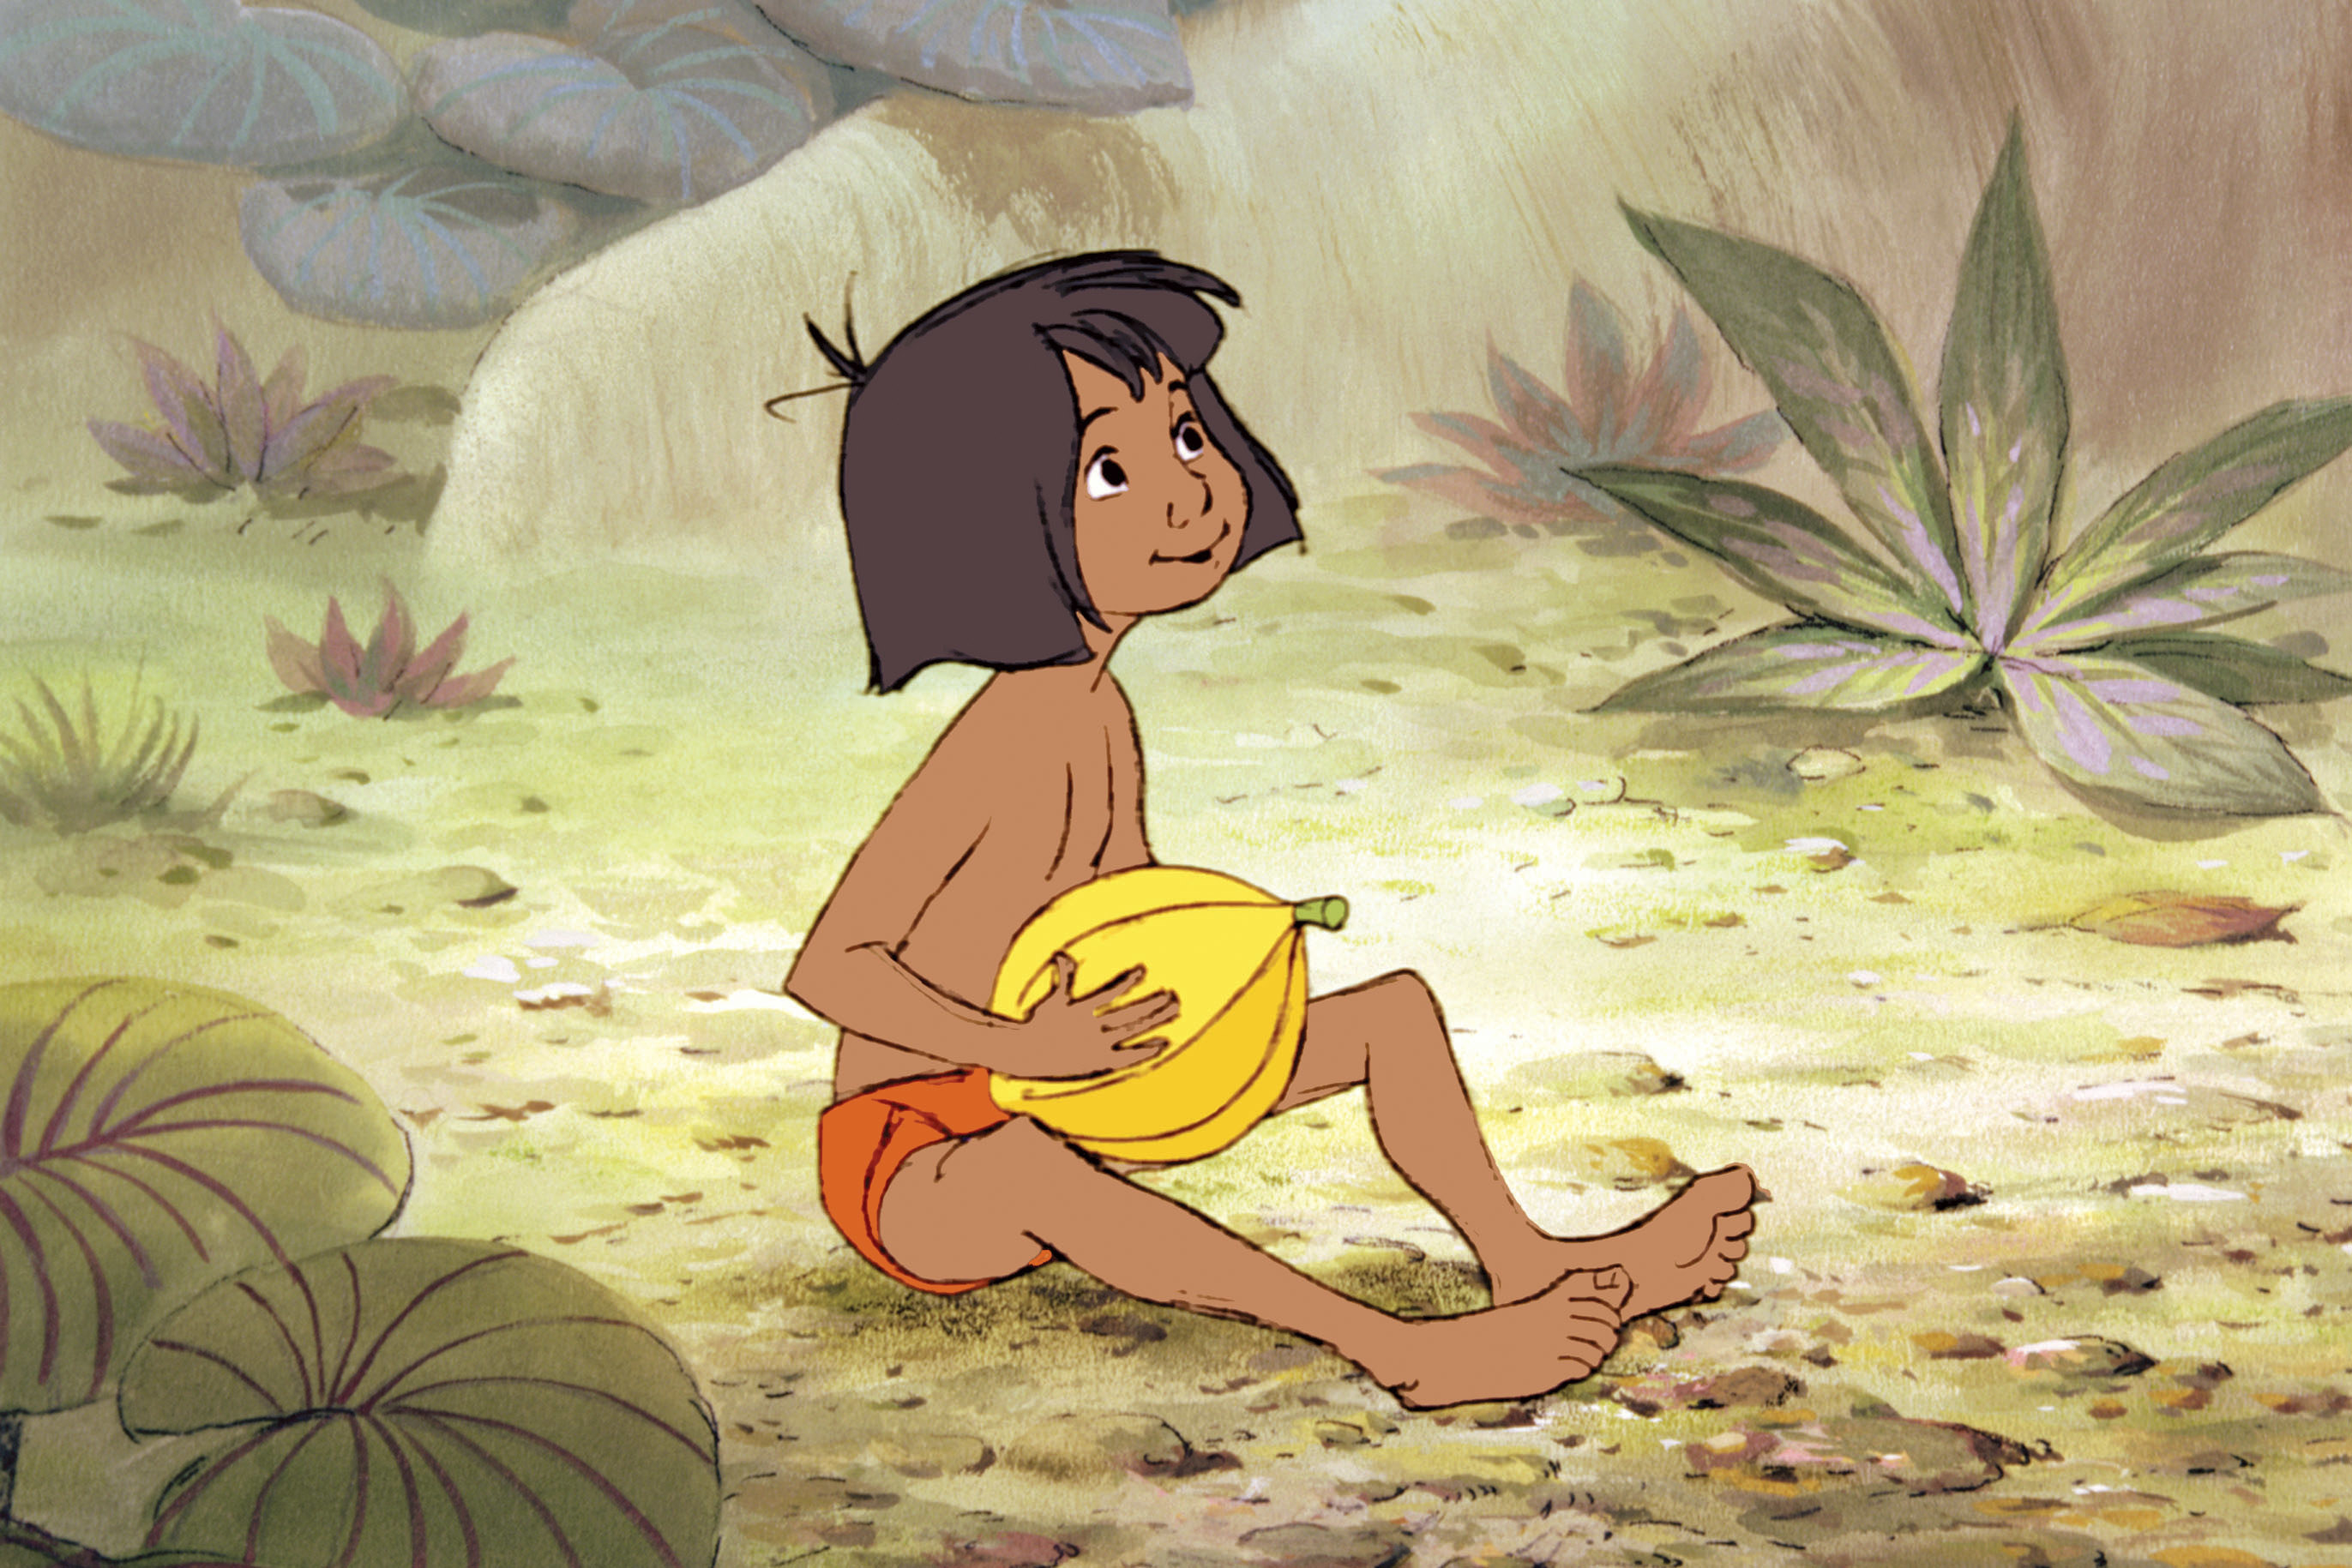 Mowgli in the animated version of The Jungle Book